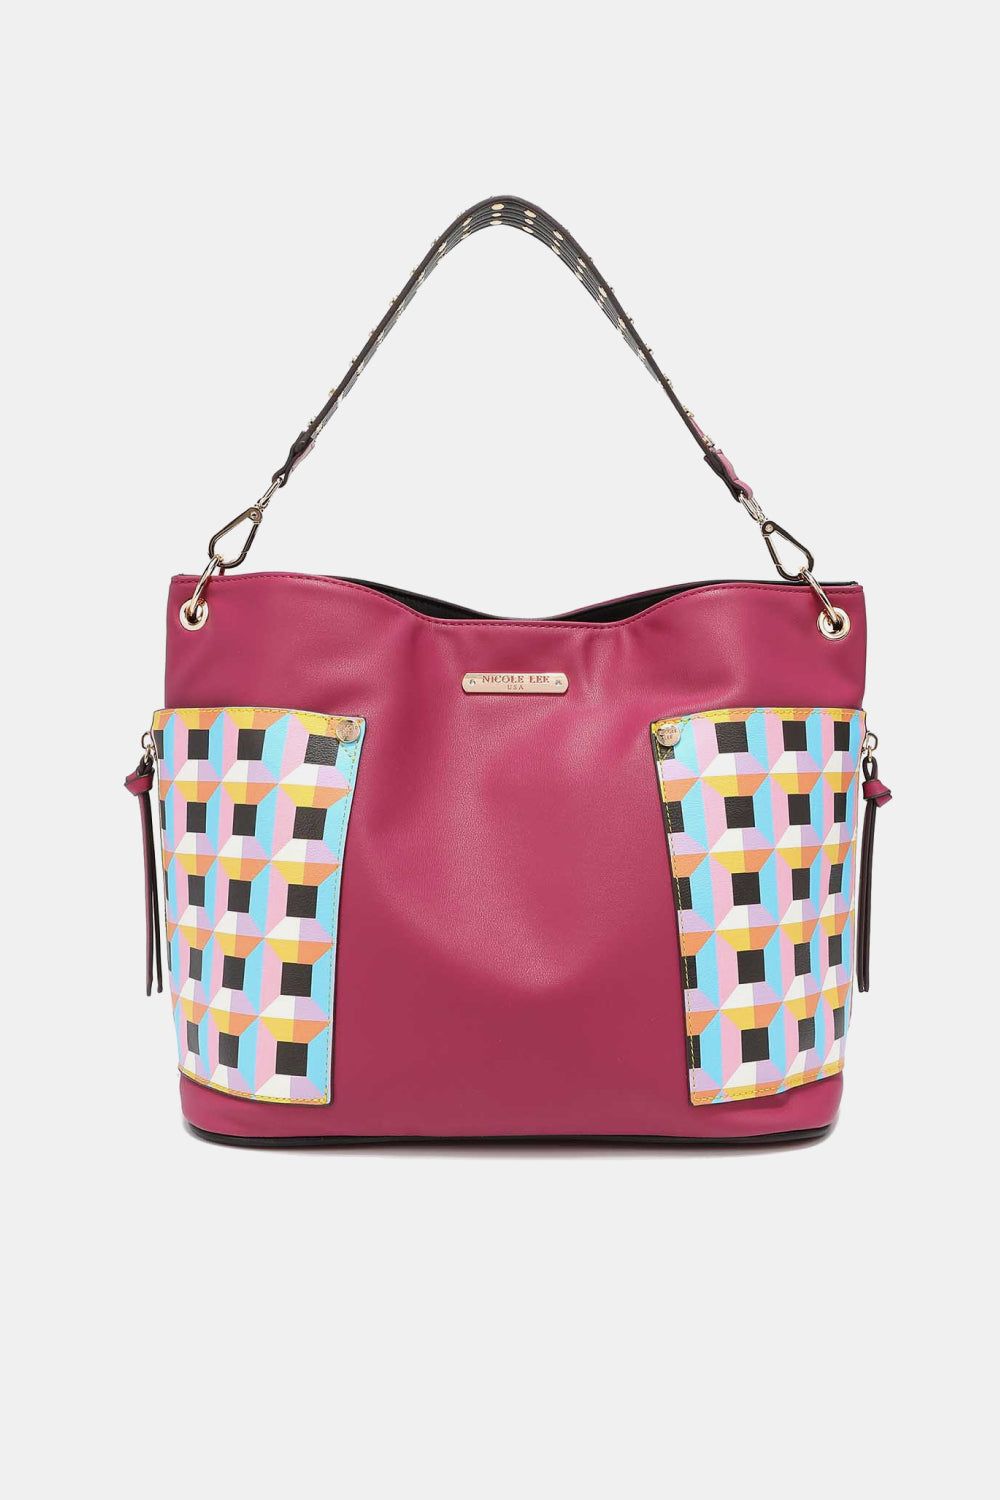 Nicole Lee USA Quihn 3-Piece Handbag Set - Tigbul's Fashion